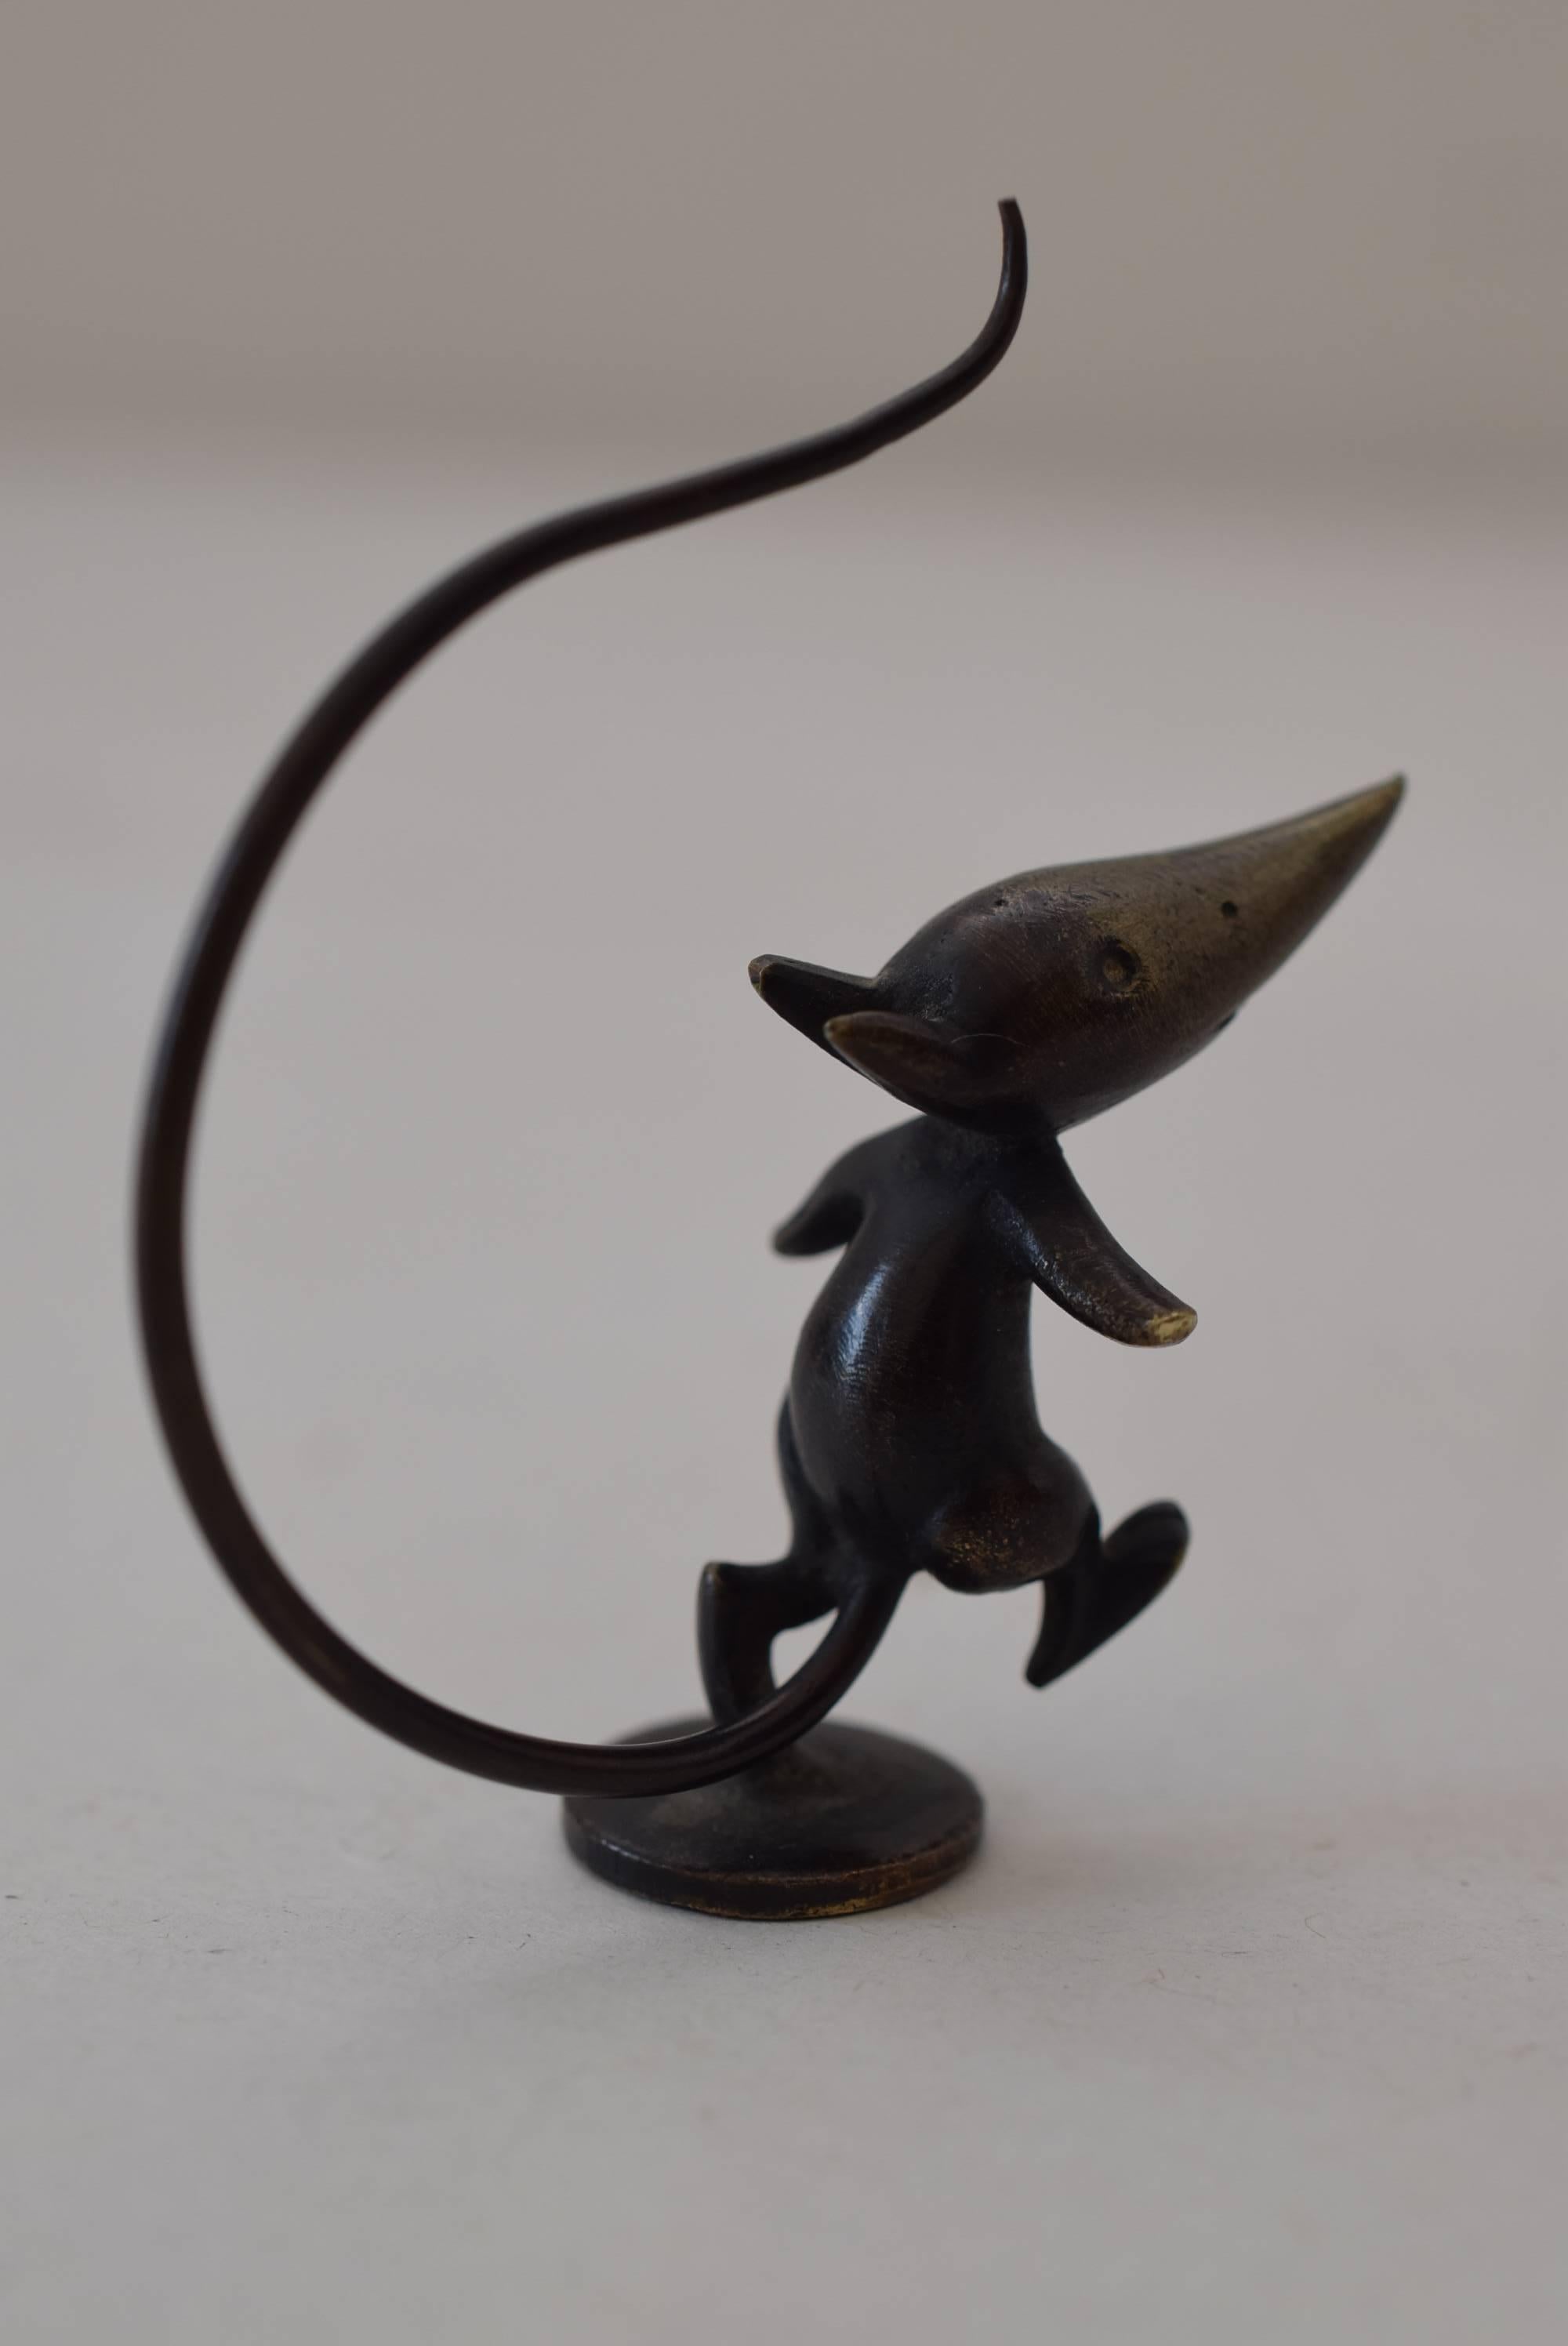 Mouse figurine by Hagenauer.

Original condition.